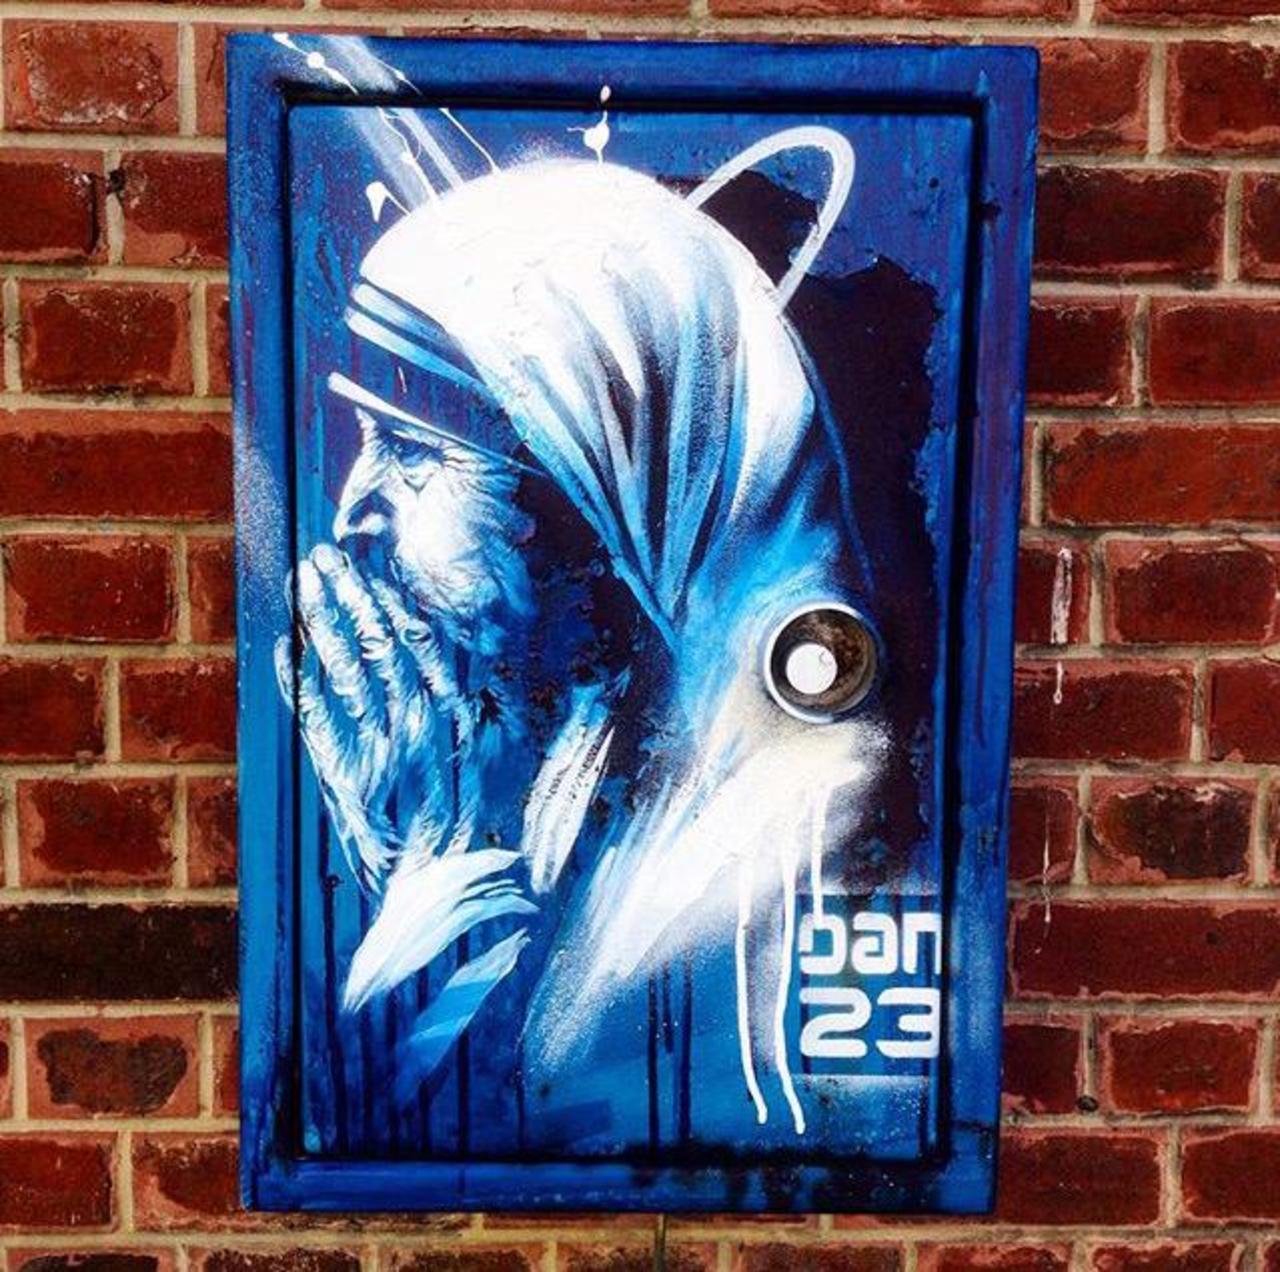 New Street Art 'Détail Spirit' by Dan23 

#art #graffiti #mural #streetart http://t.co/ooYW7JoHLU